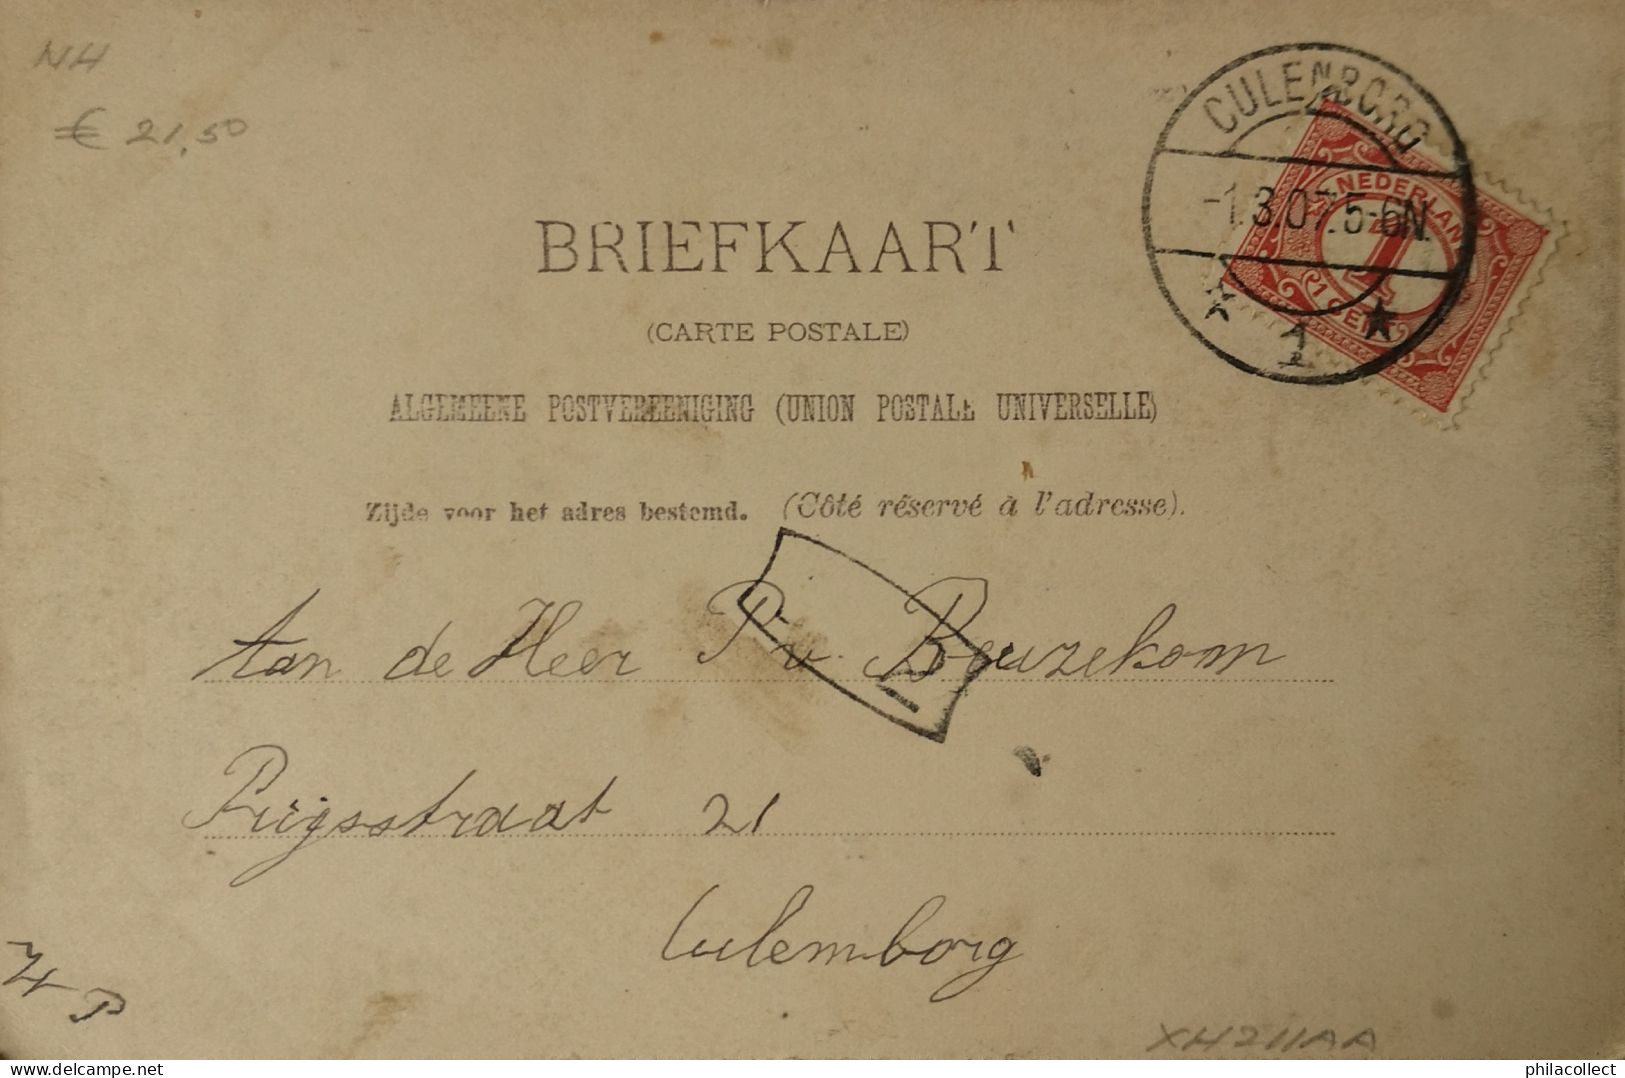 Alkmaar // Kennemersingel 1907 Iets Vuil - Alkmaar